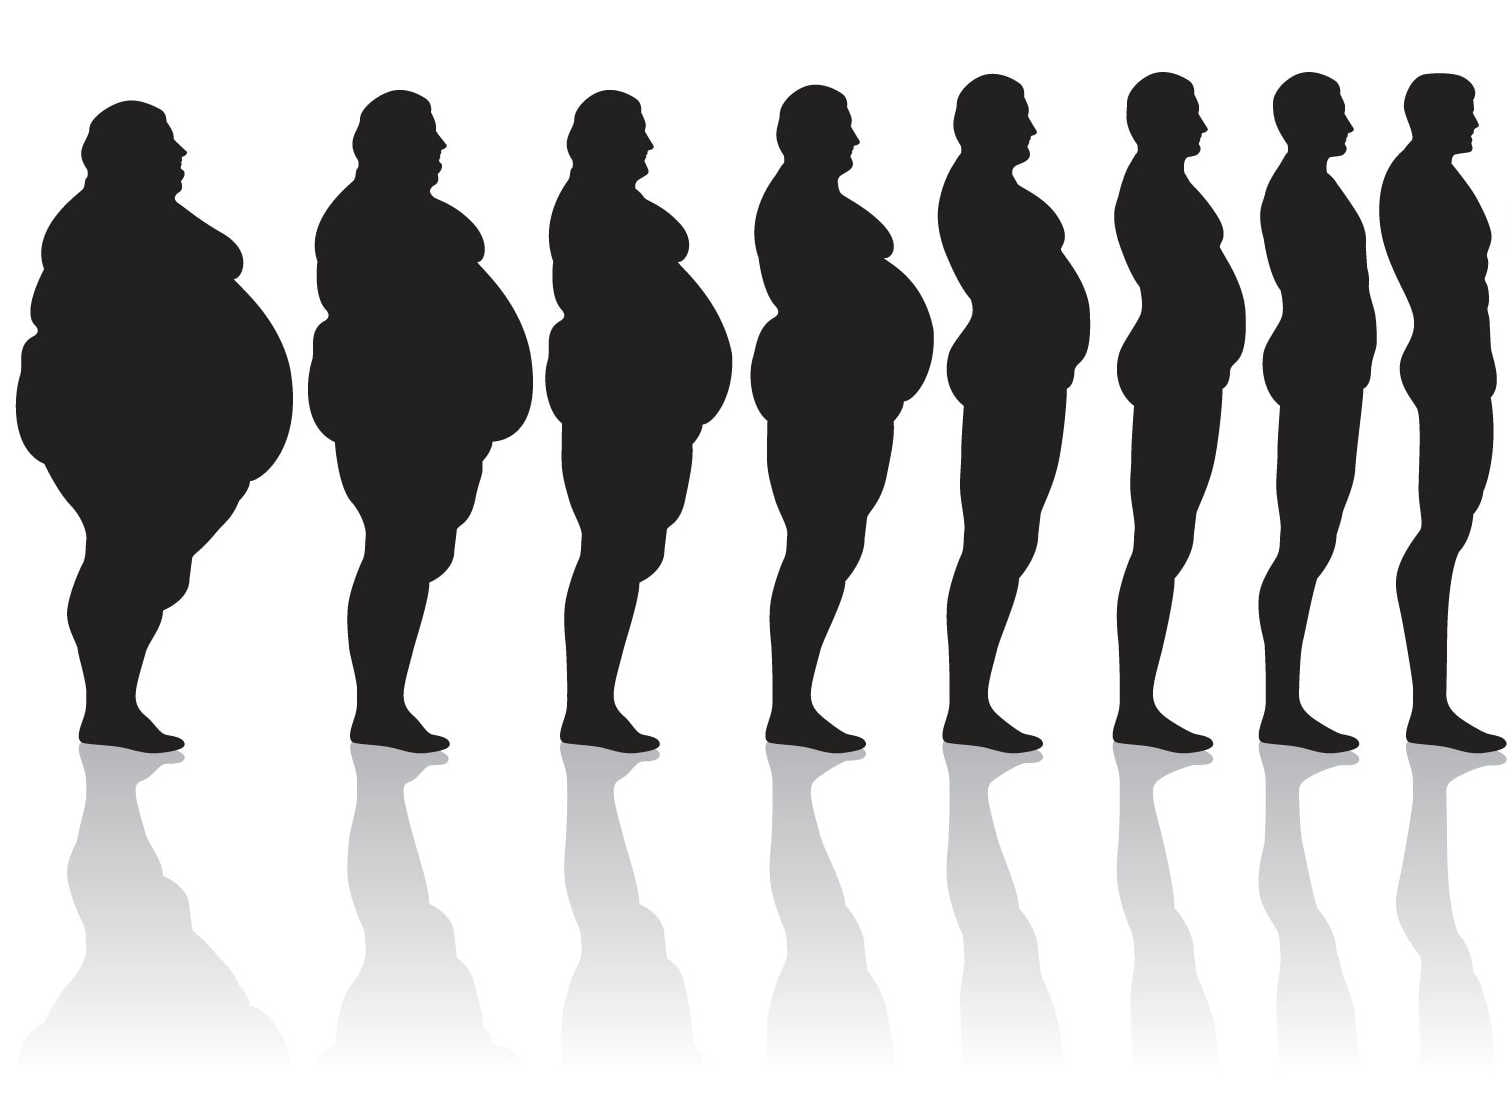 Transition Fat To Thin1 مجلة نقطة العلمية